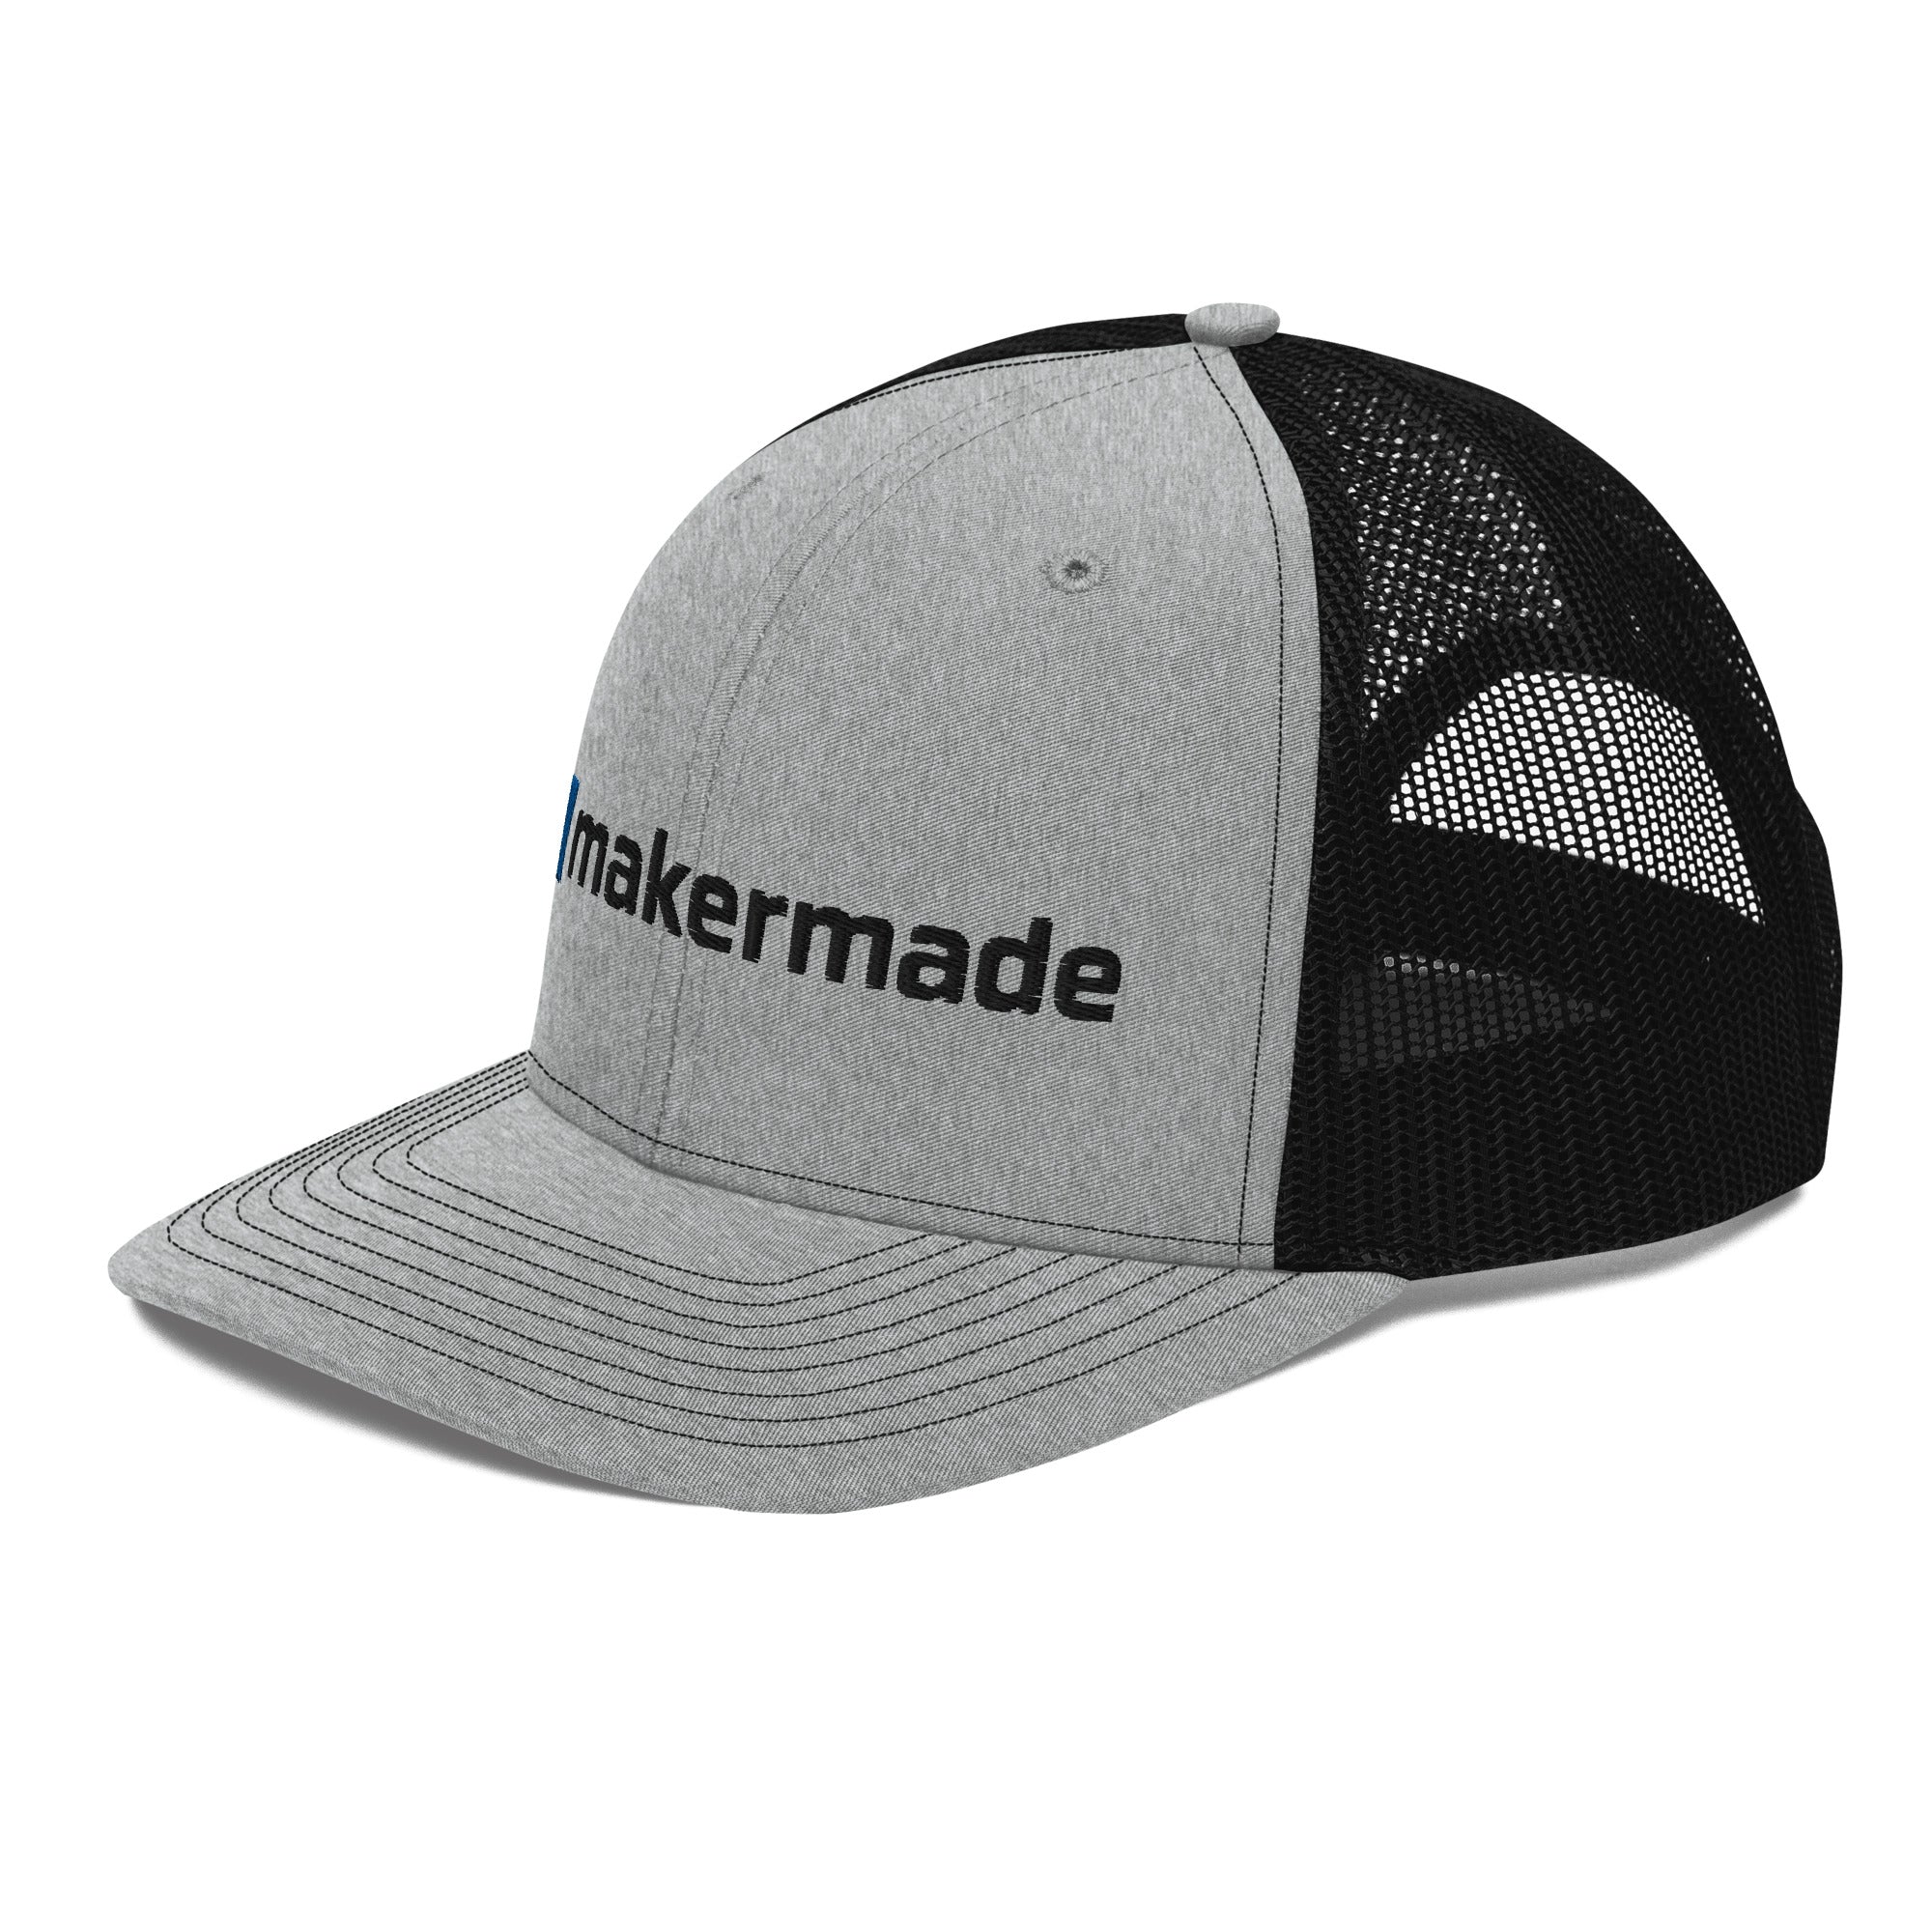 Makermade Trucker Cap